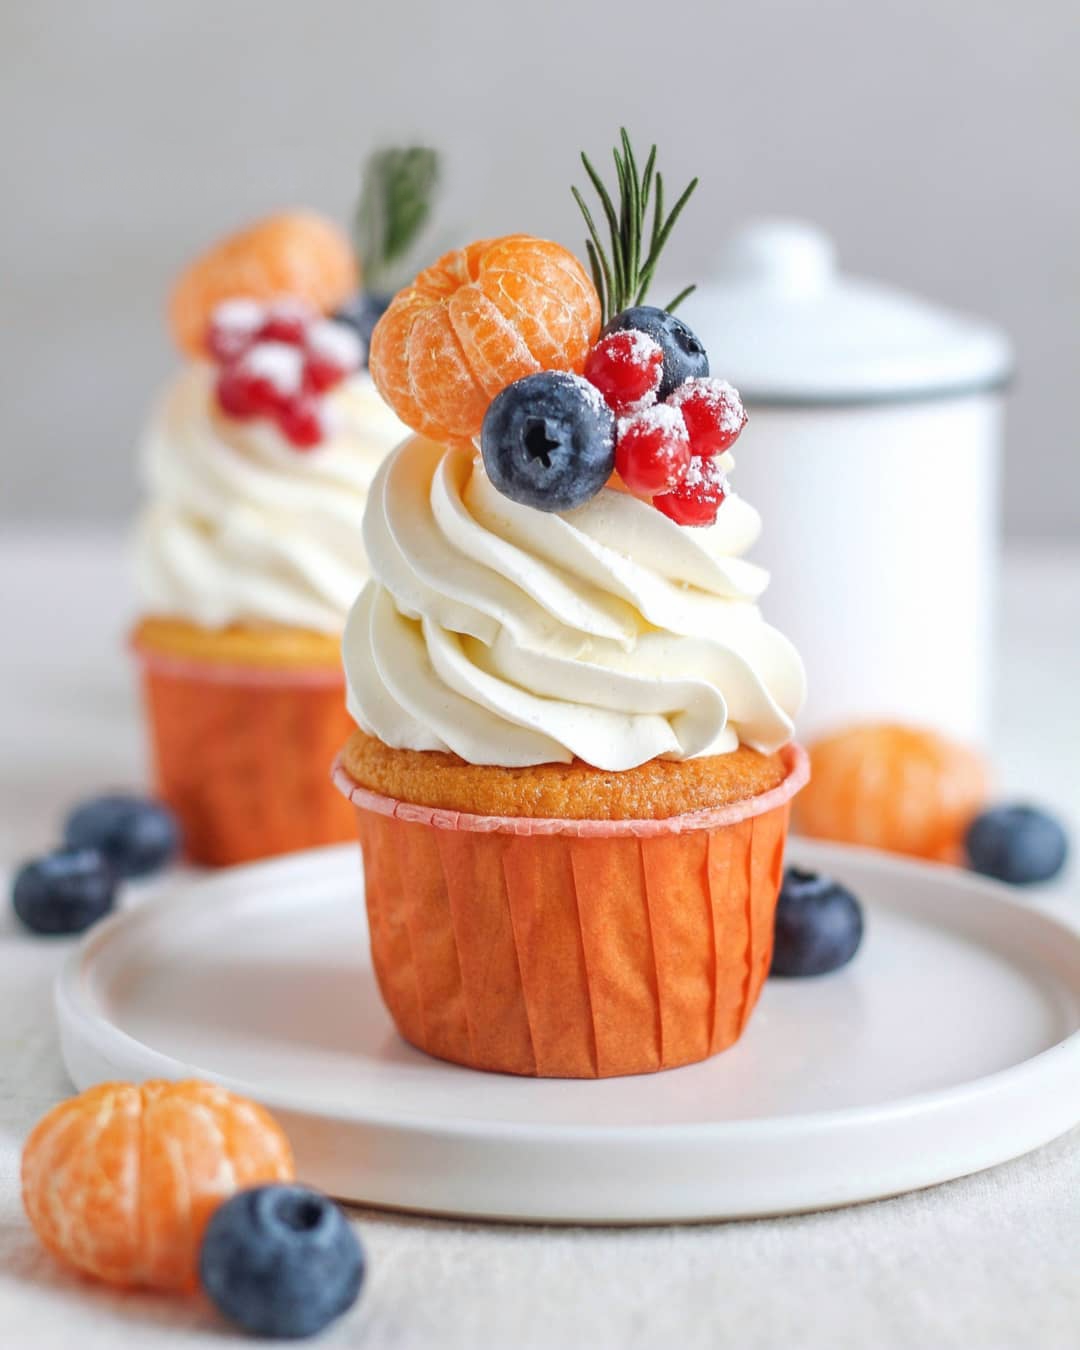 Tangerine cupcakes